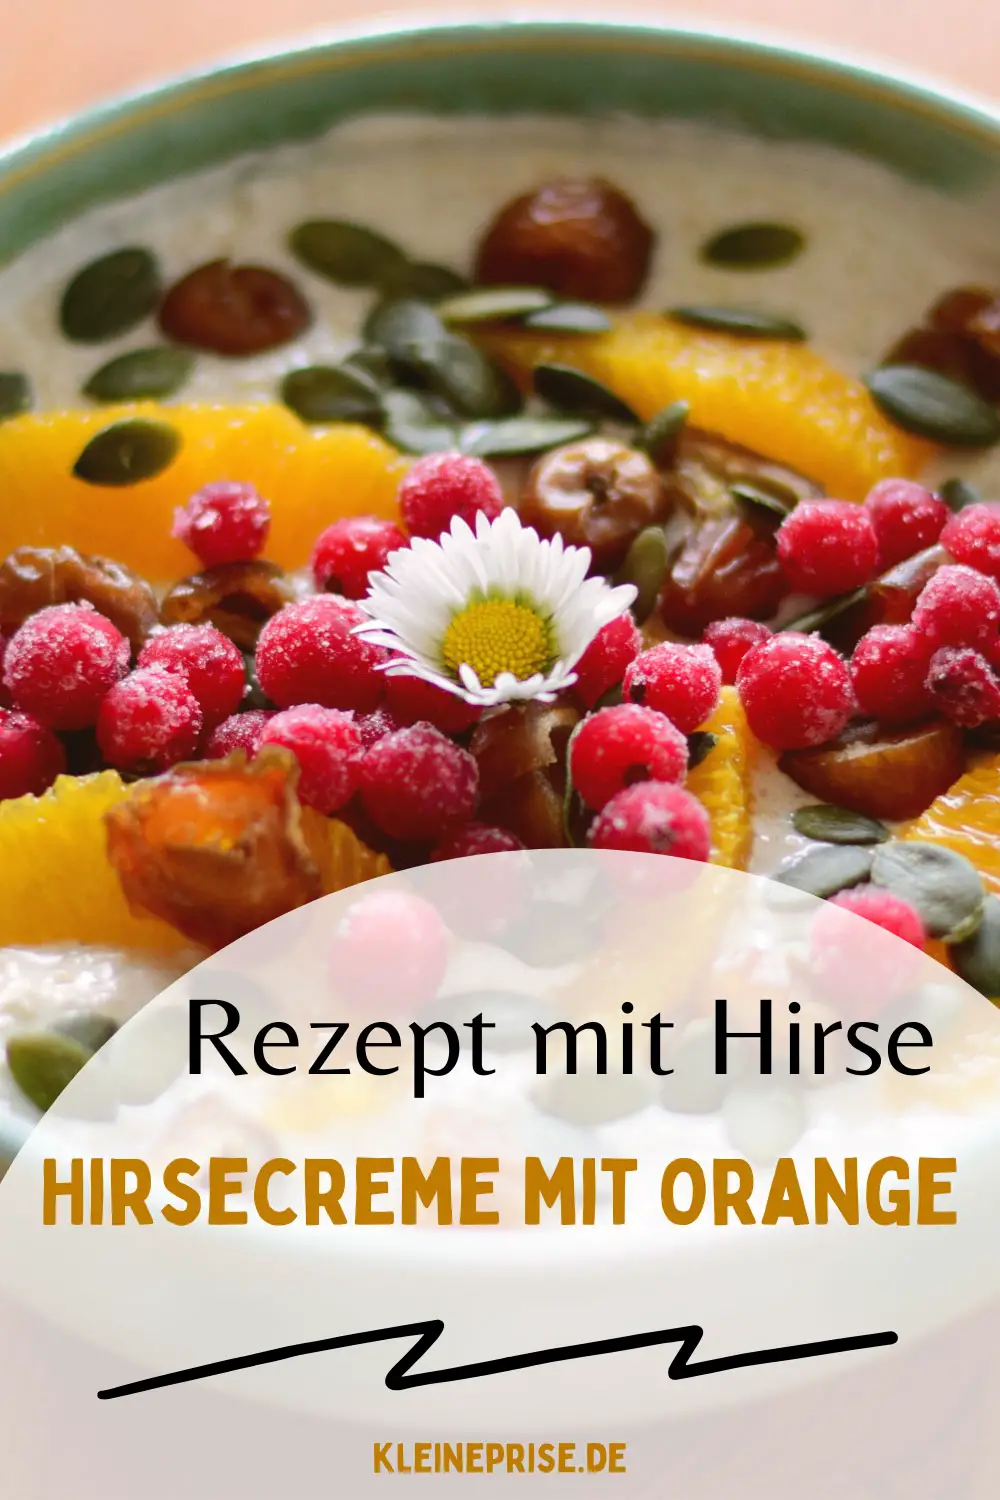 Pin es bei Pinterest: Rezept mit Hirse - Hirsecreme mit Orange